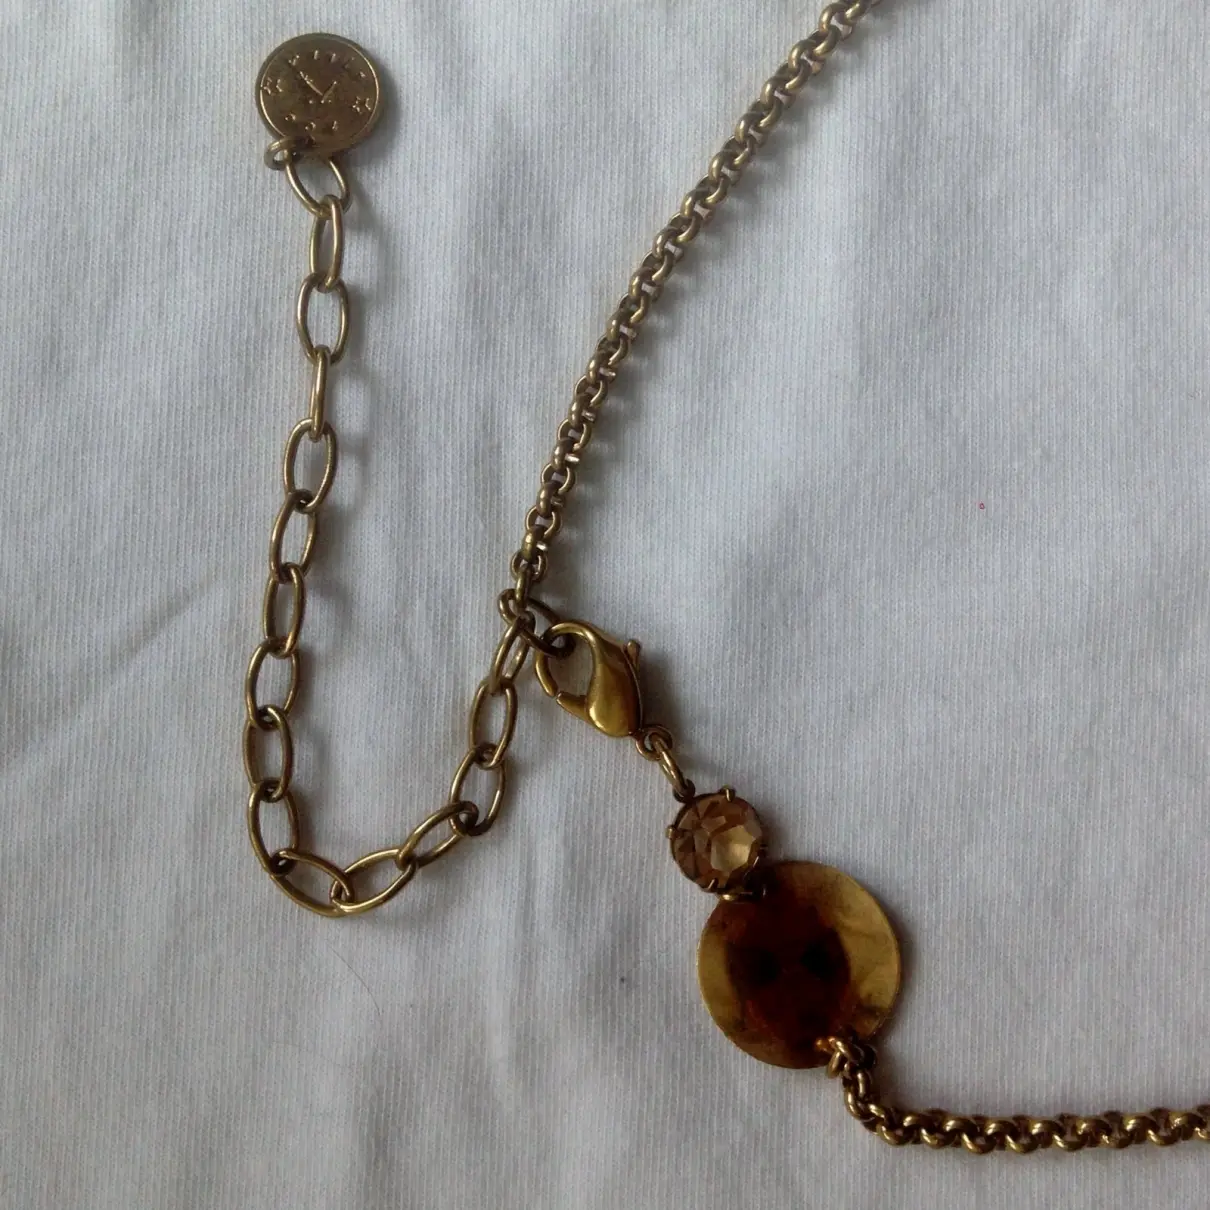 Buy Reminiscence Necklace online - Vintage